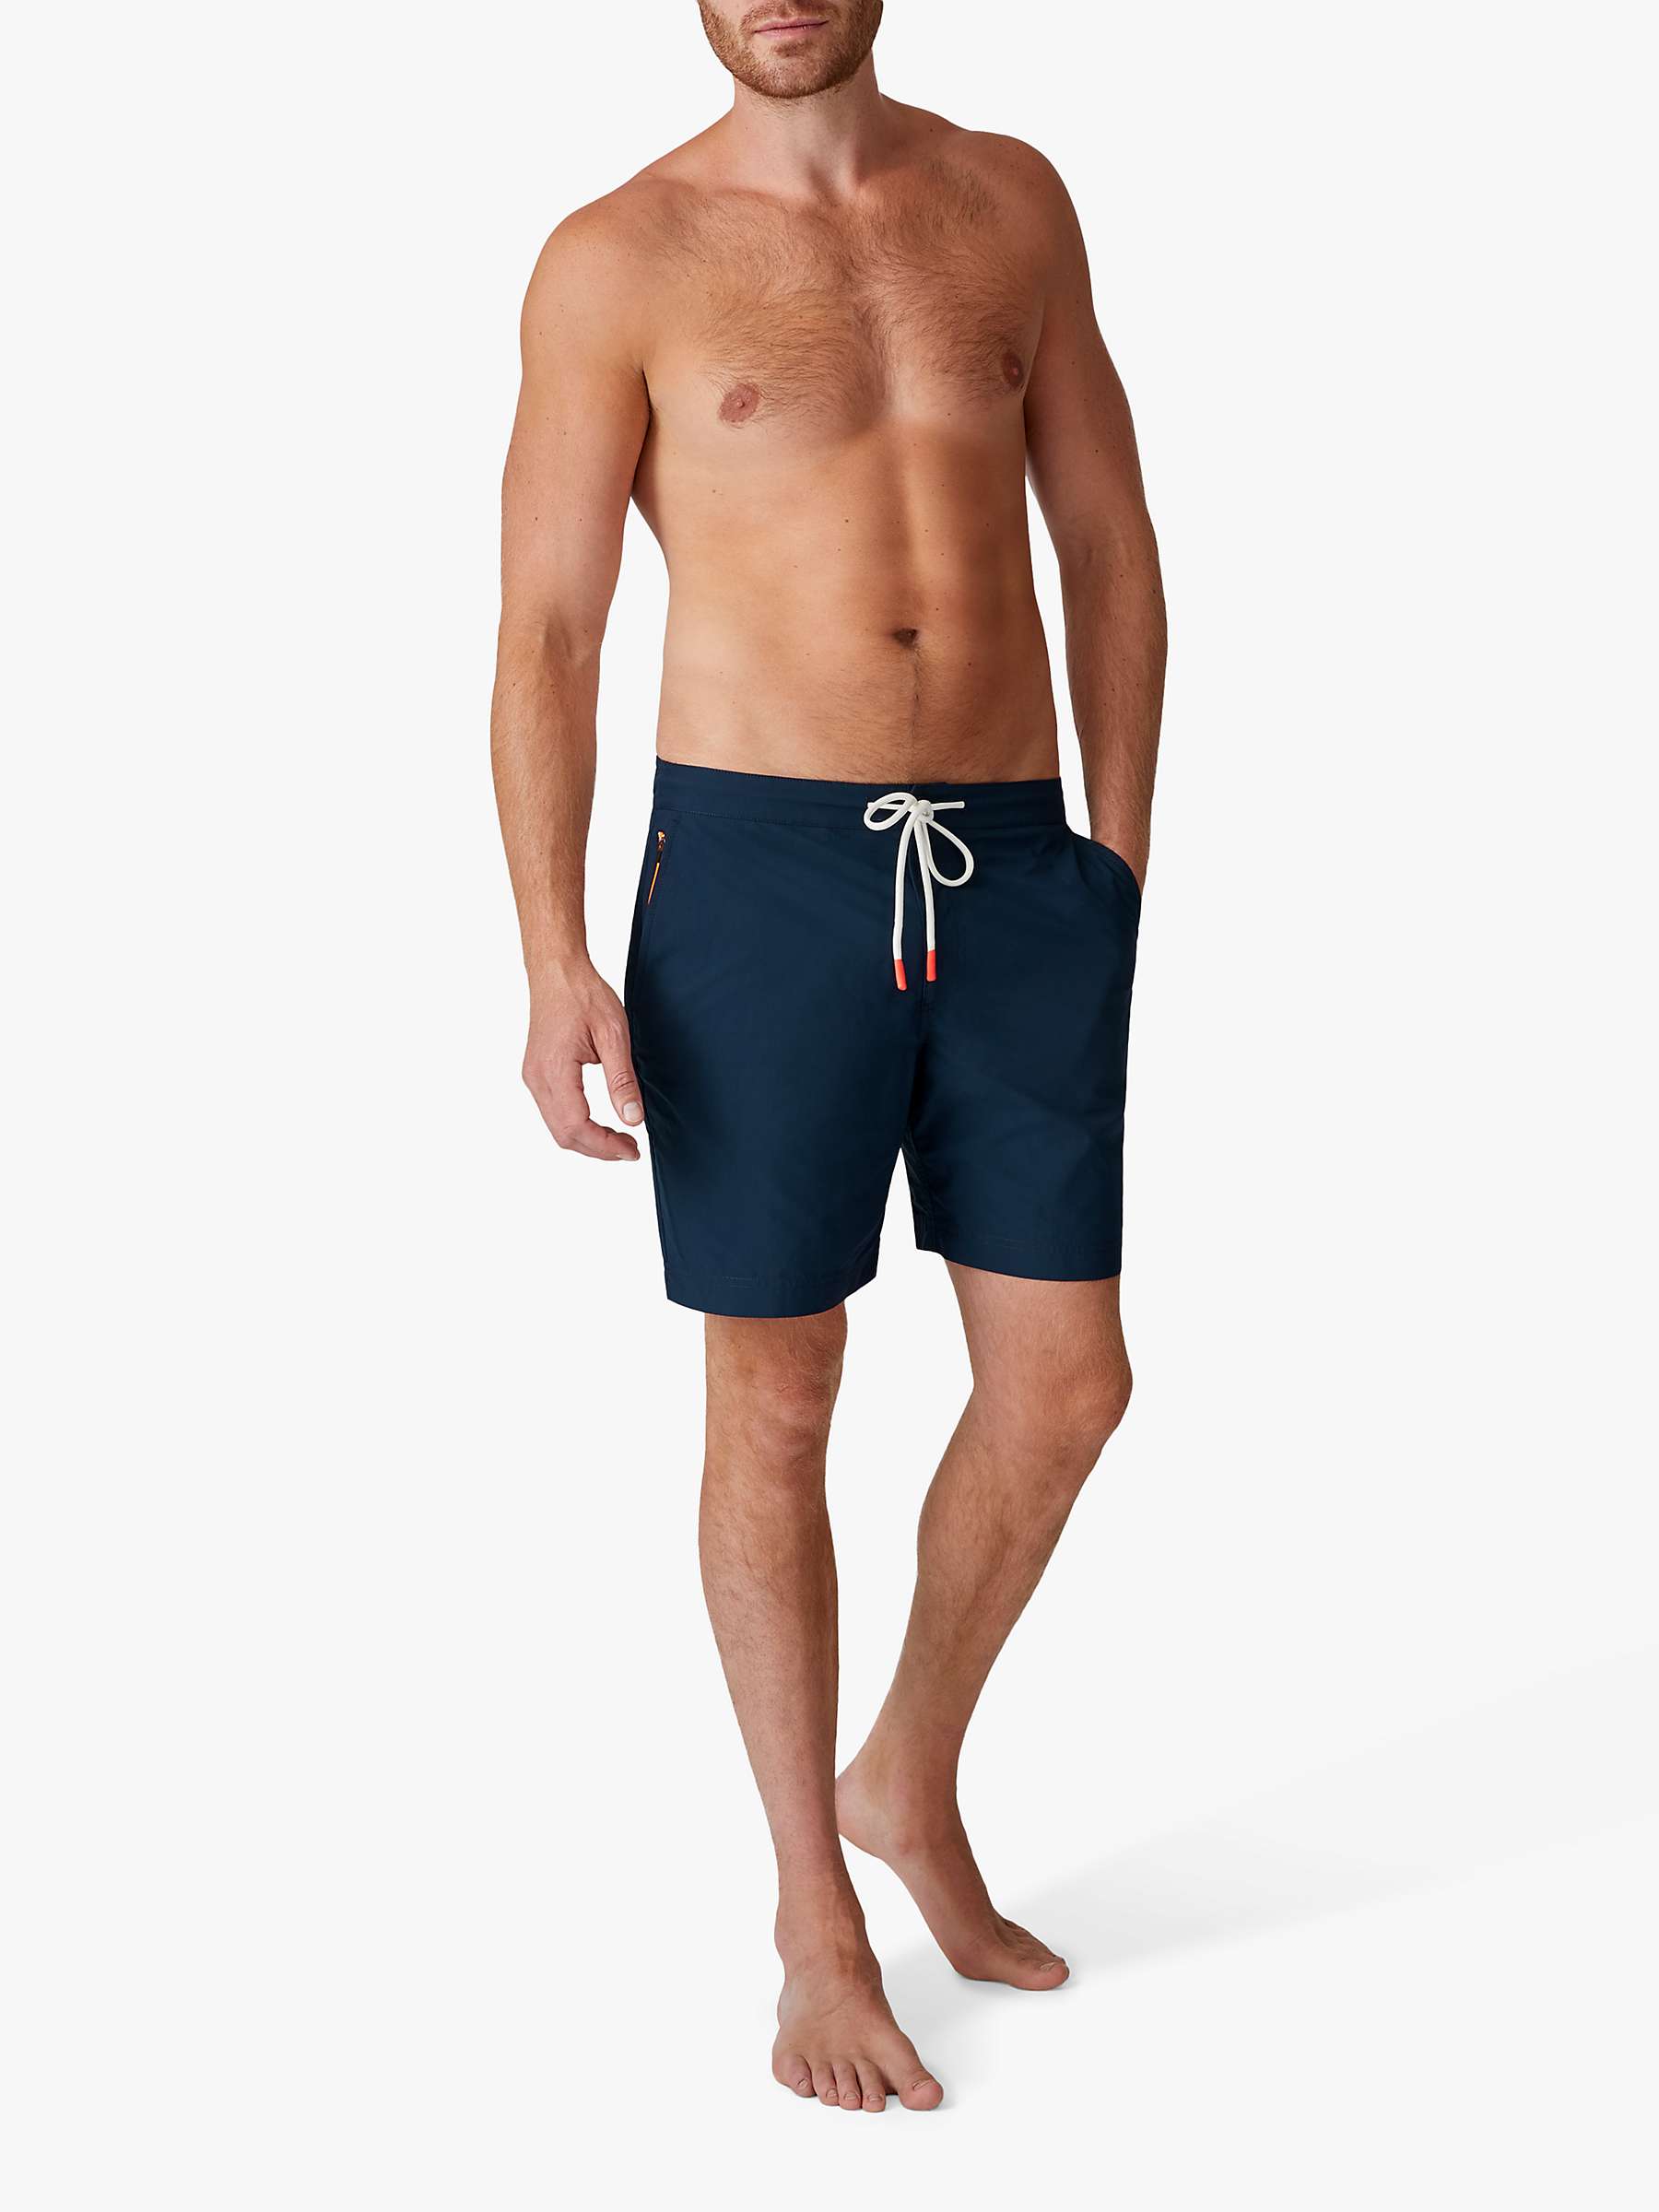 Buy SPOKE Swims Regular Thigh Swim Shorts, Navy Online at johnlewis.com